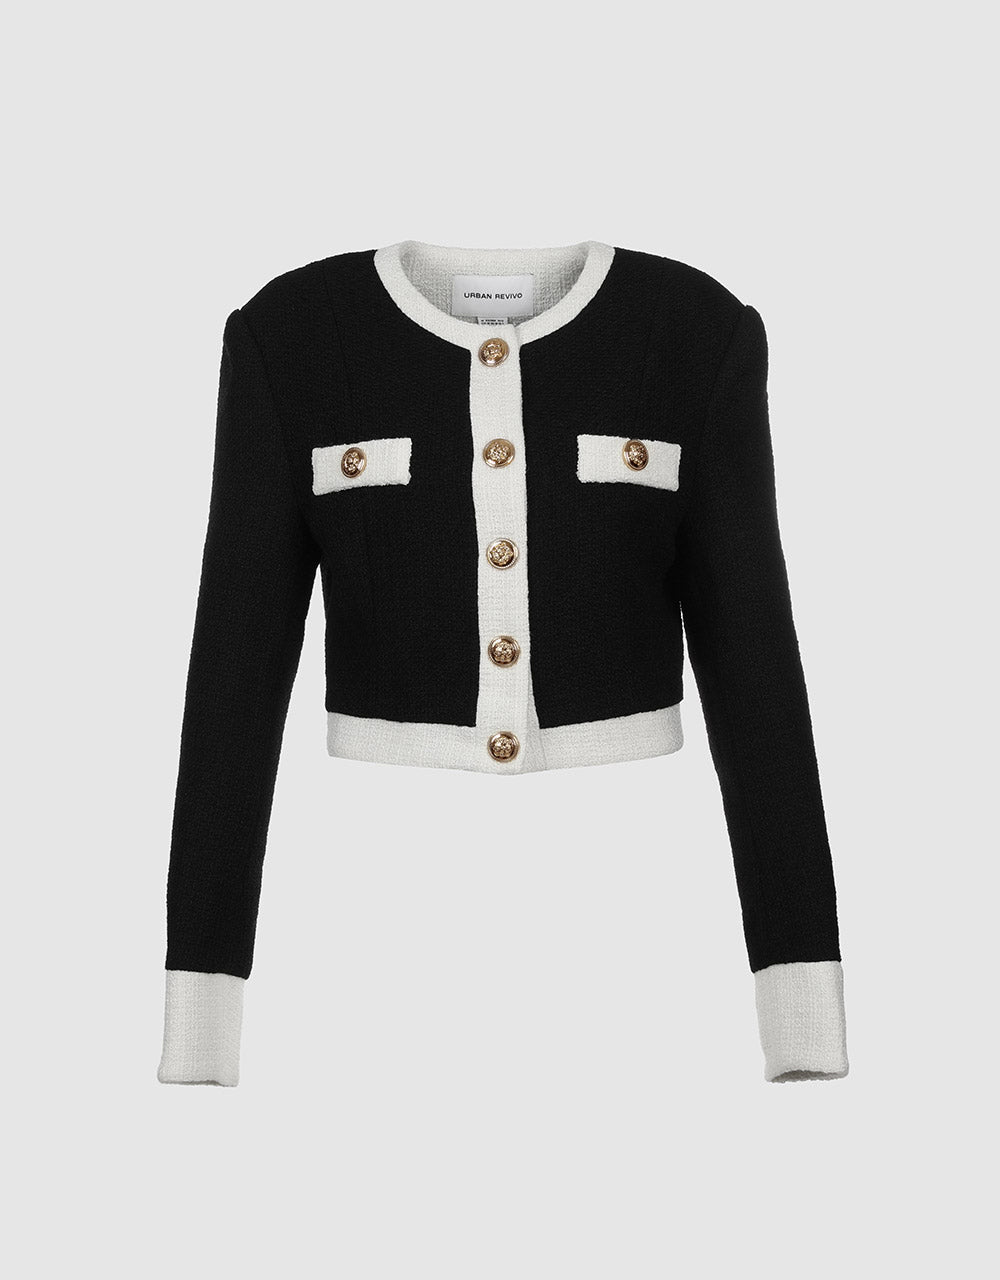 Contrast Trim Tweed Cardigan | Contrast Trim Crop Chanel Style Jacket ...